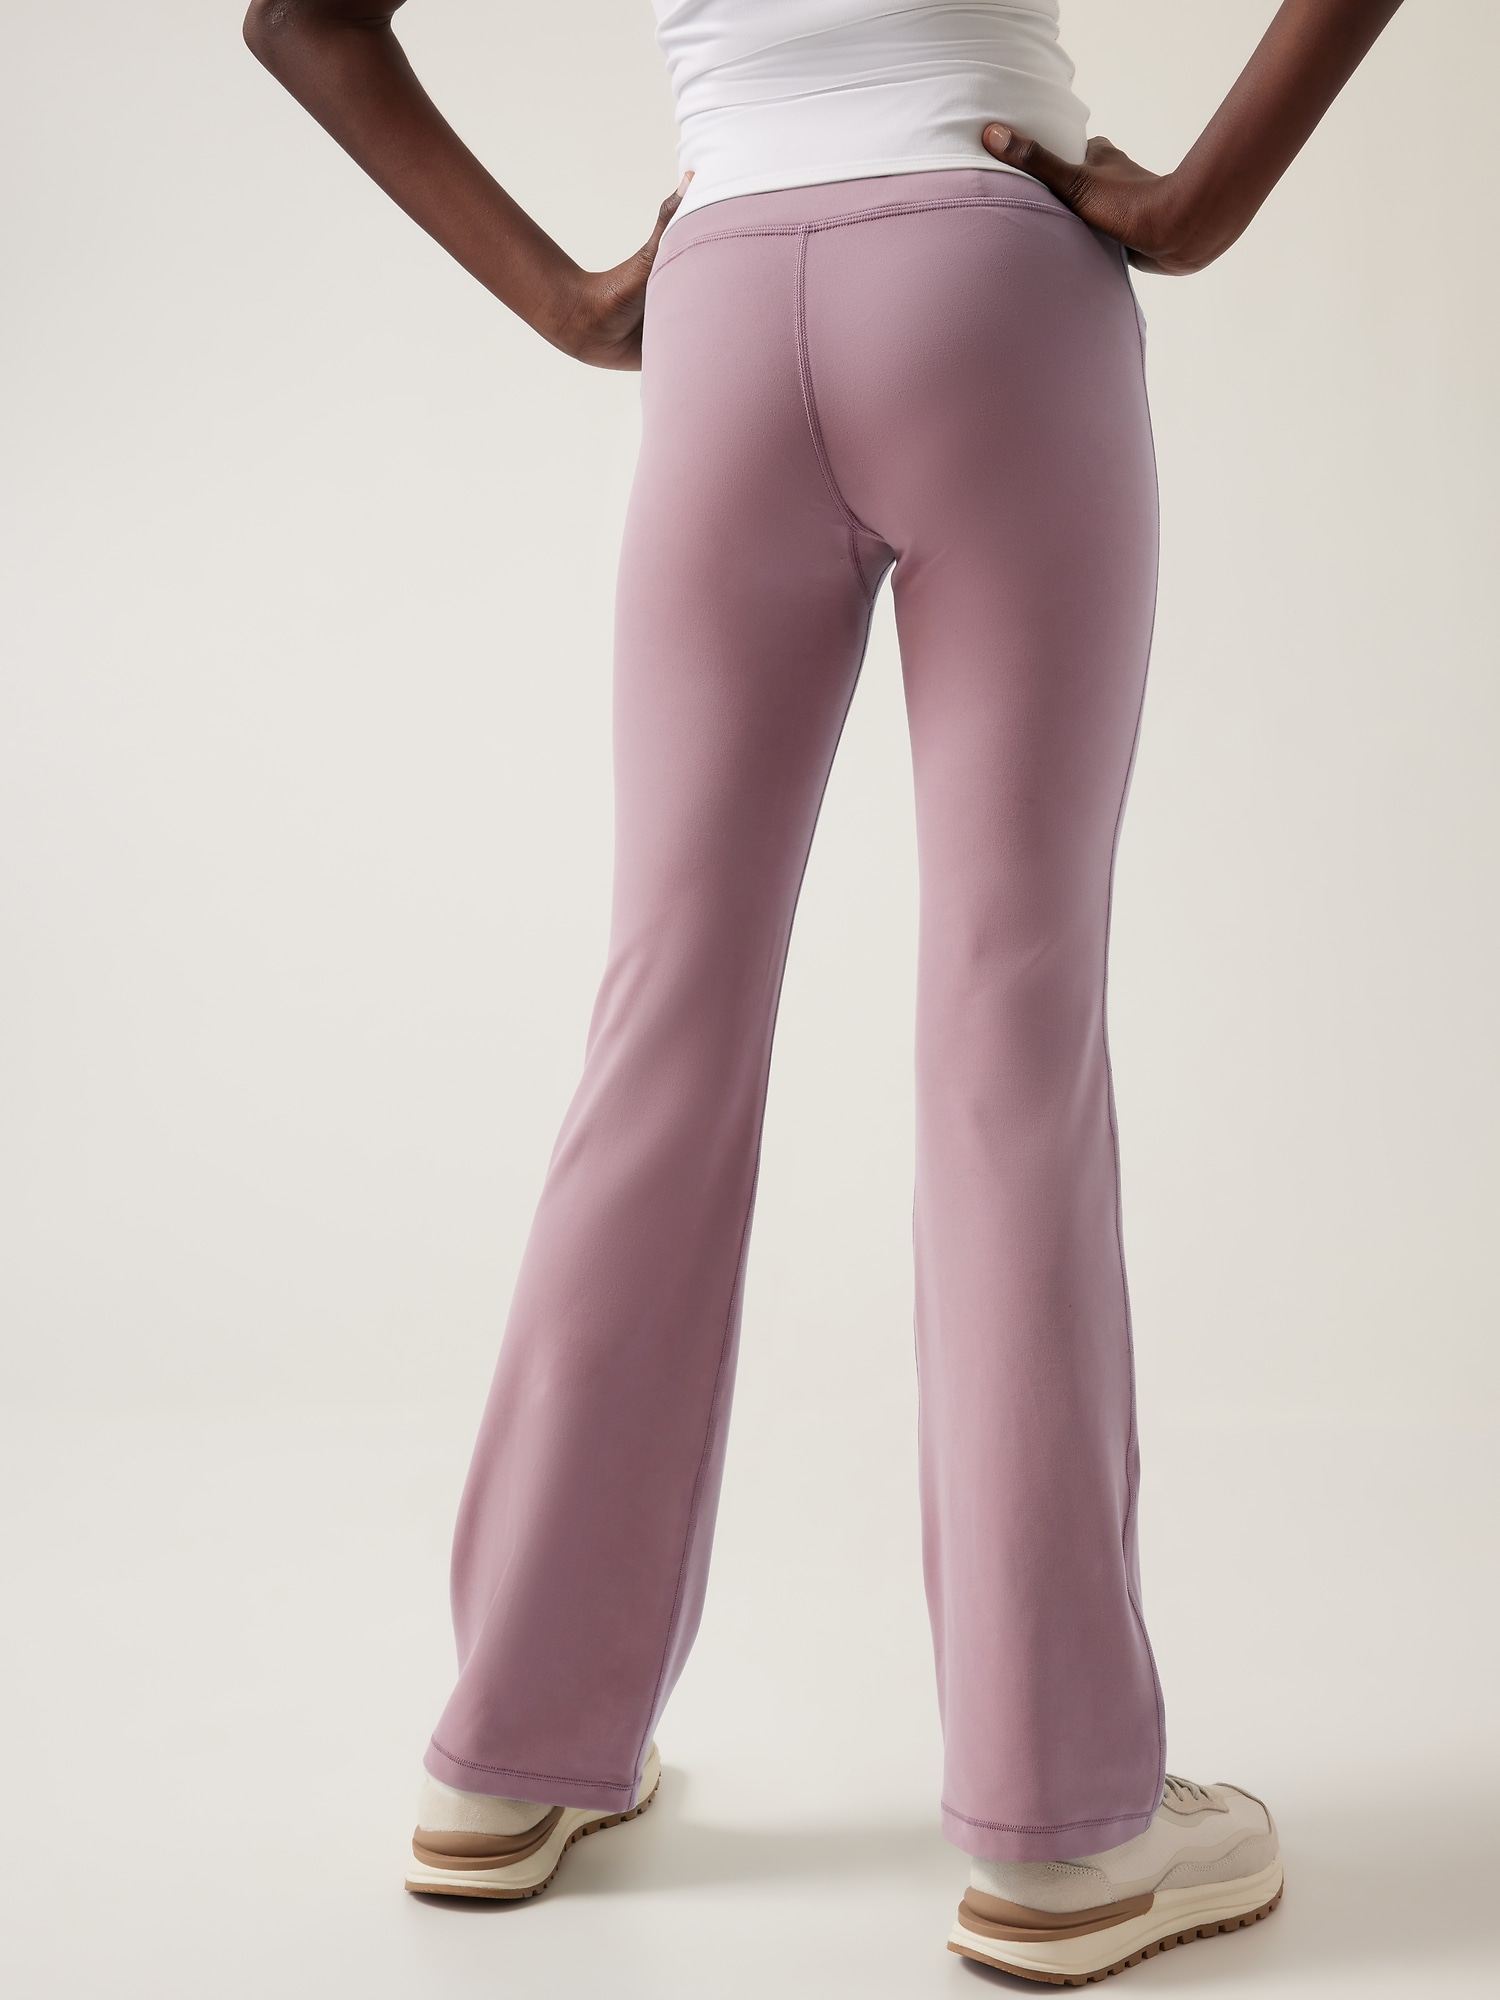 Athleta Women's Gray Gusset Coolmax Yoga Pants Flared Leggings Size Medium  10/12